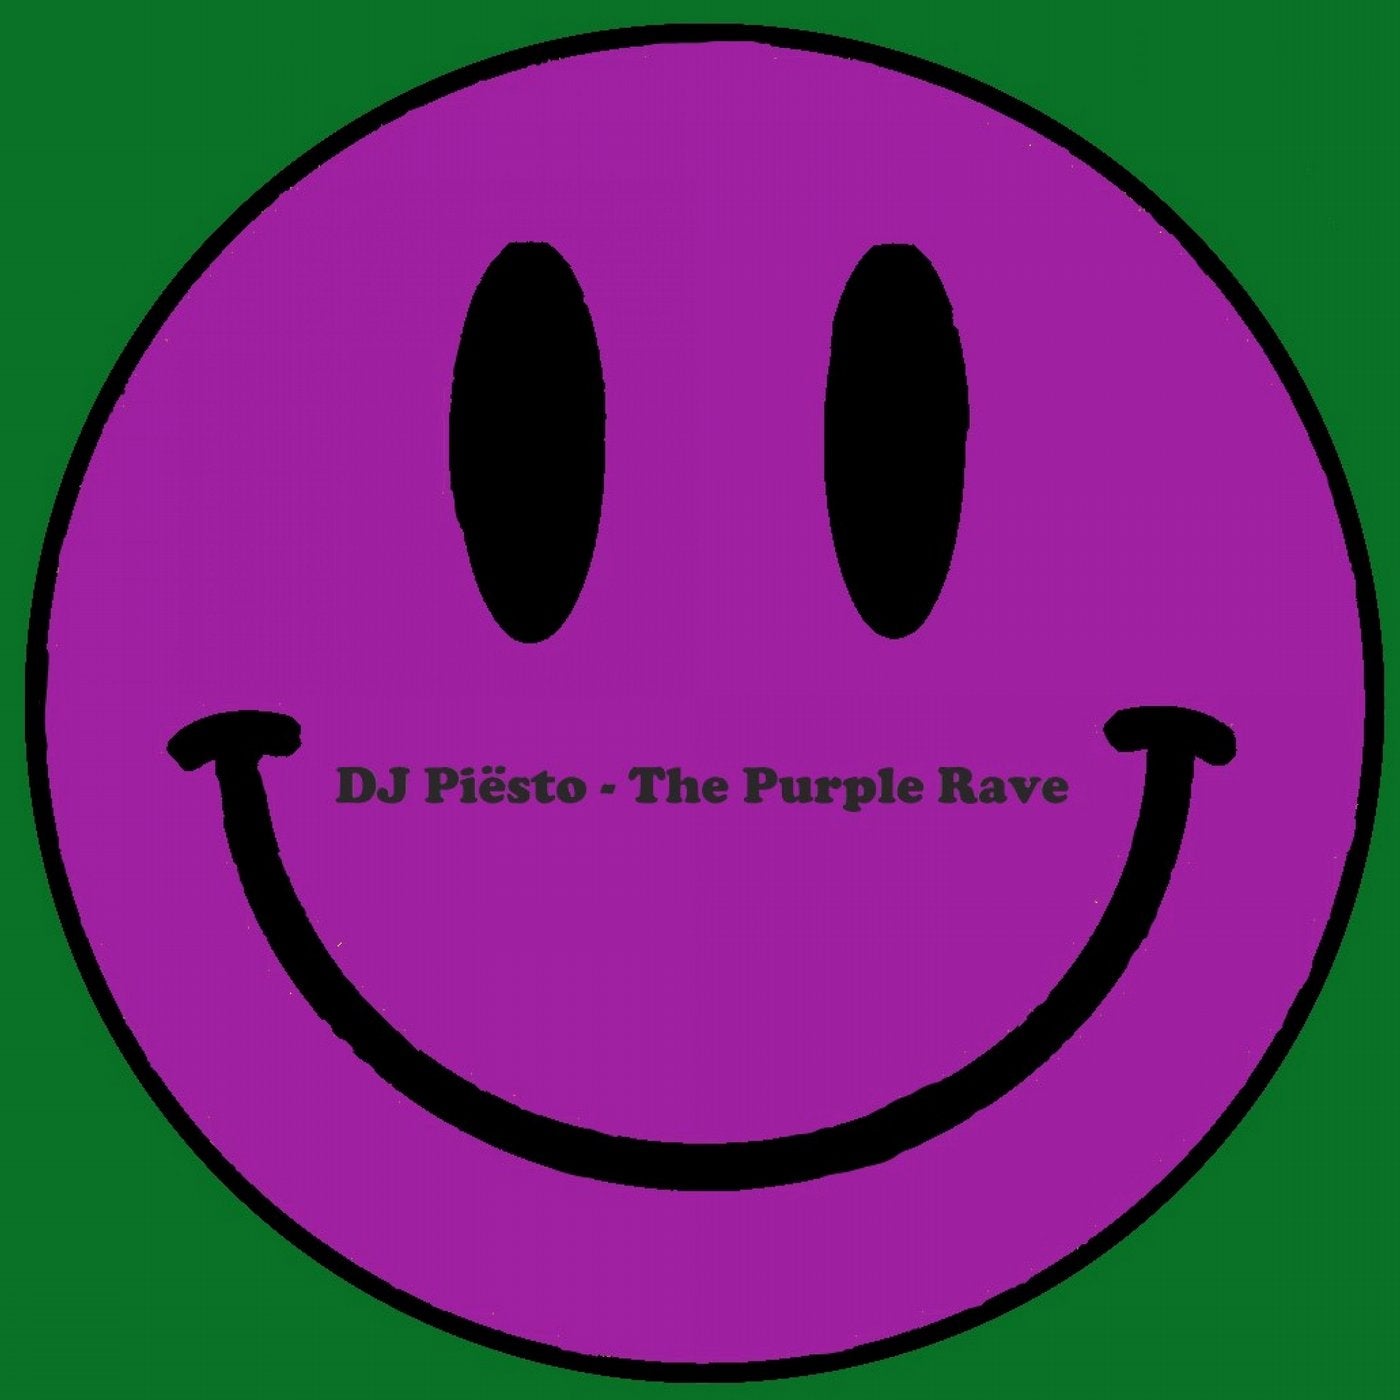 The Purple Rave